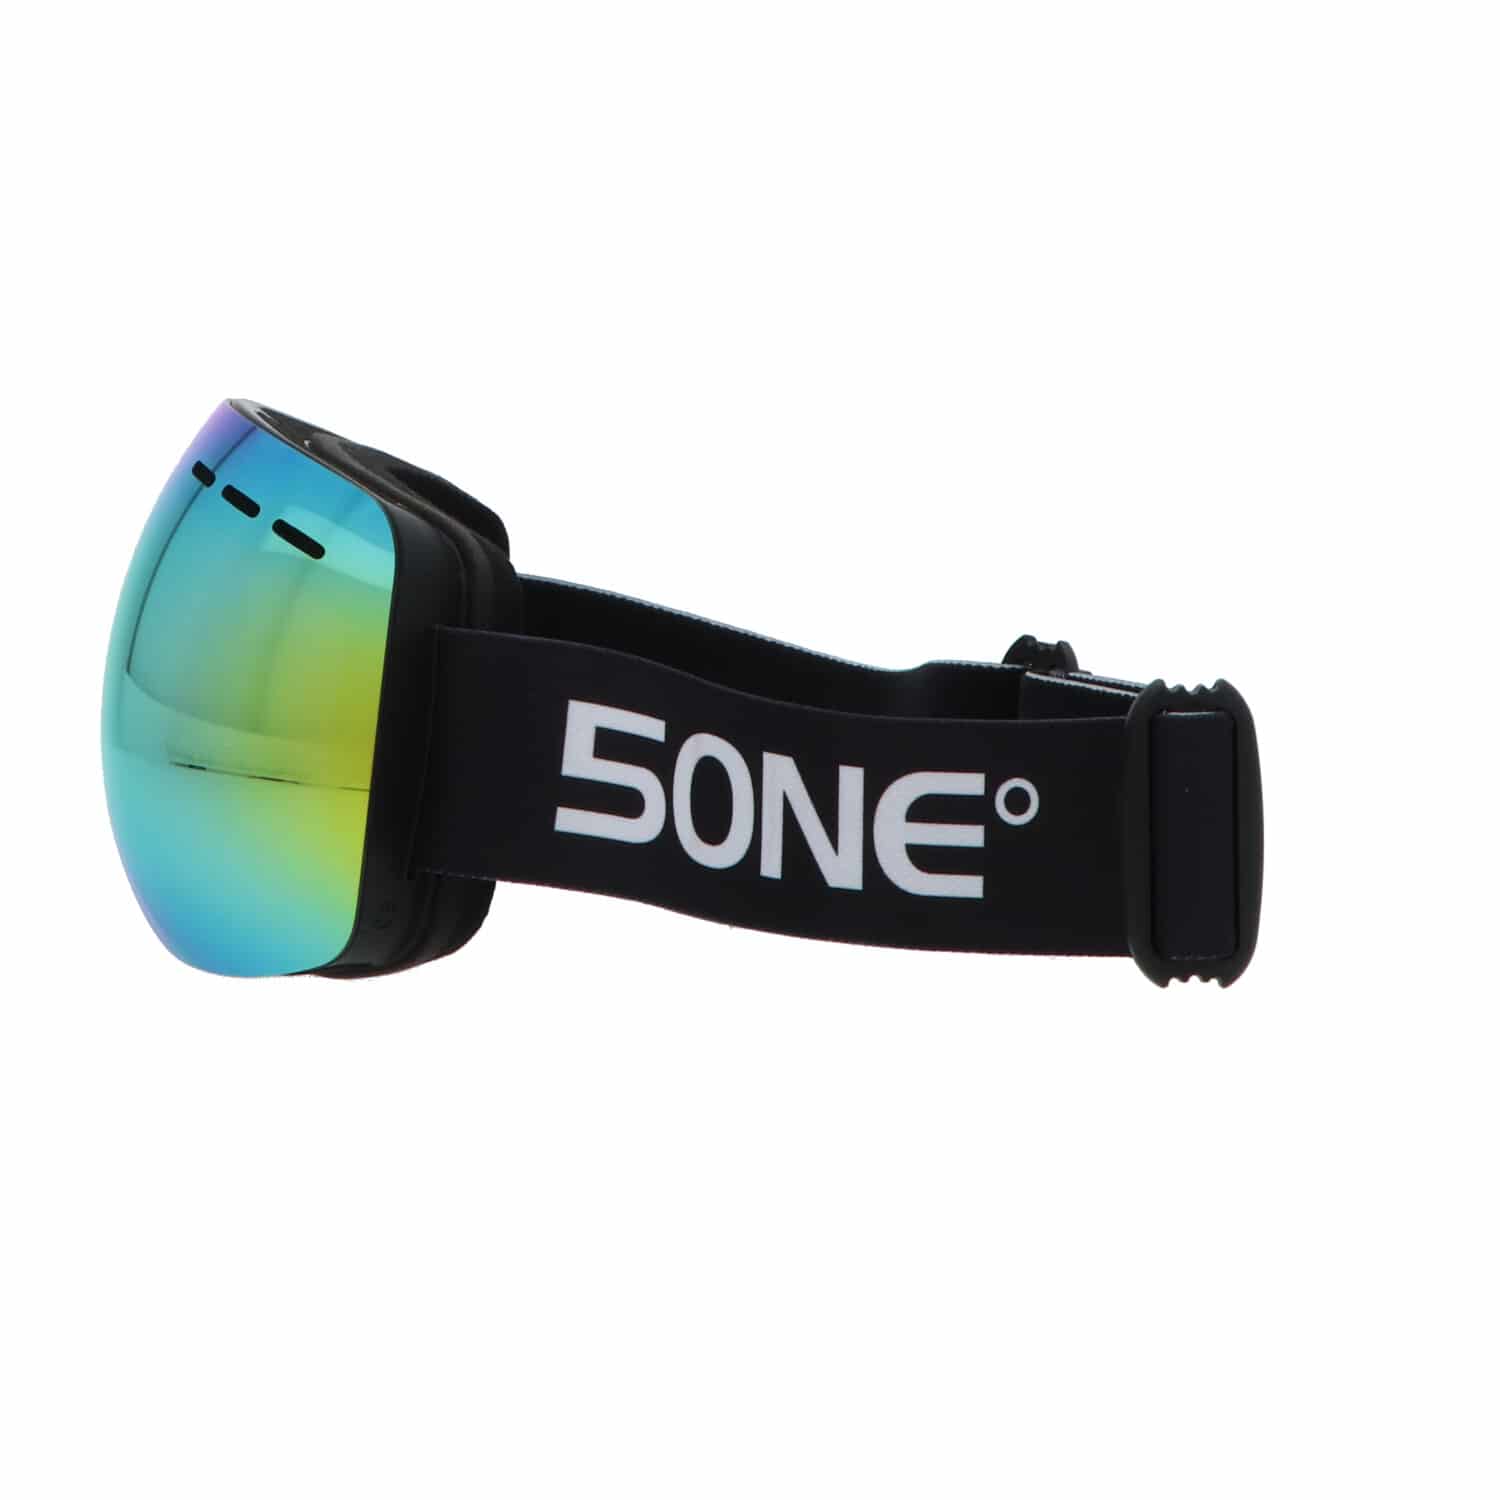 5one® Alpine 1 Gold anti-condens Skibril met hardcase - Zwart frame